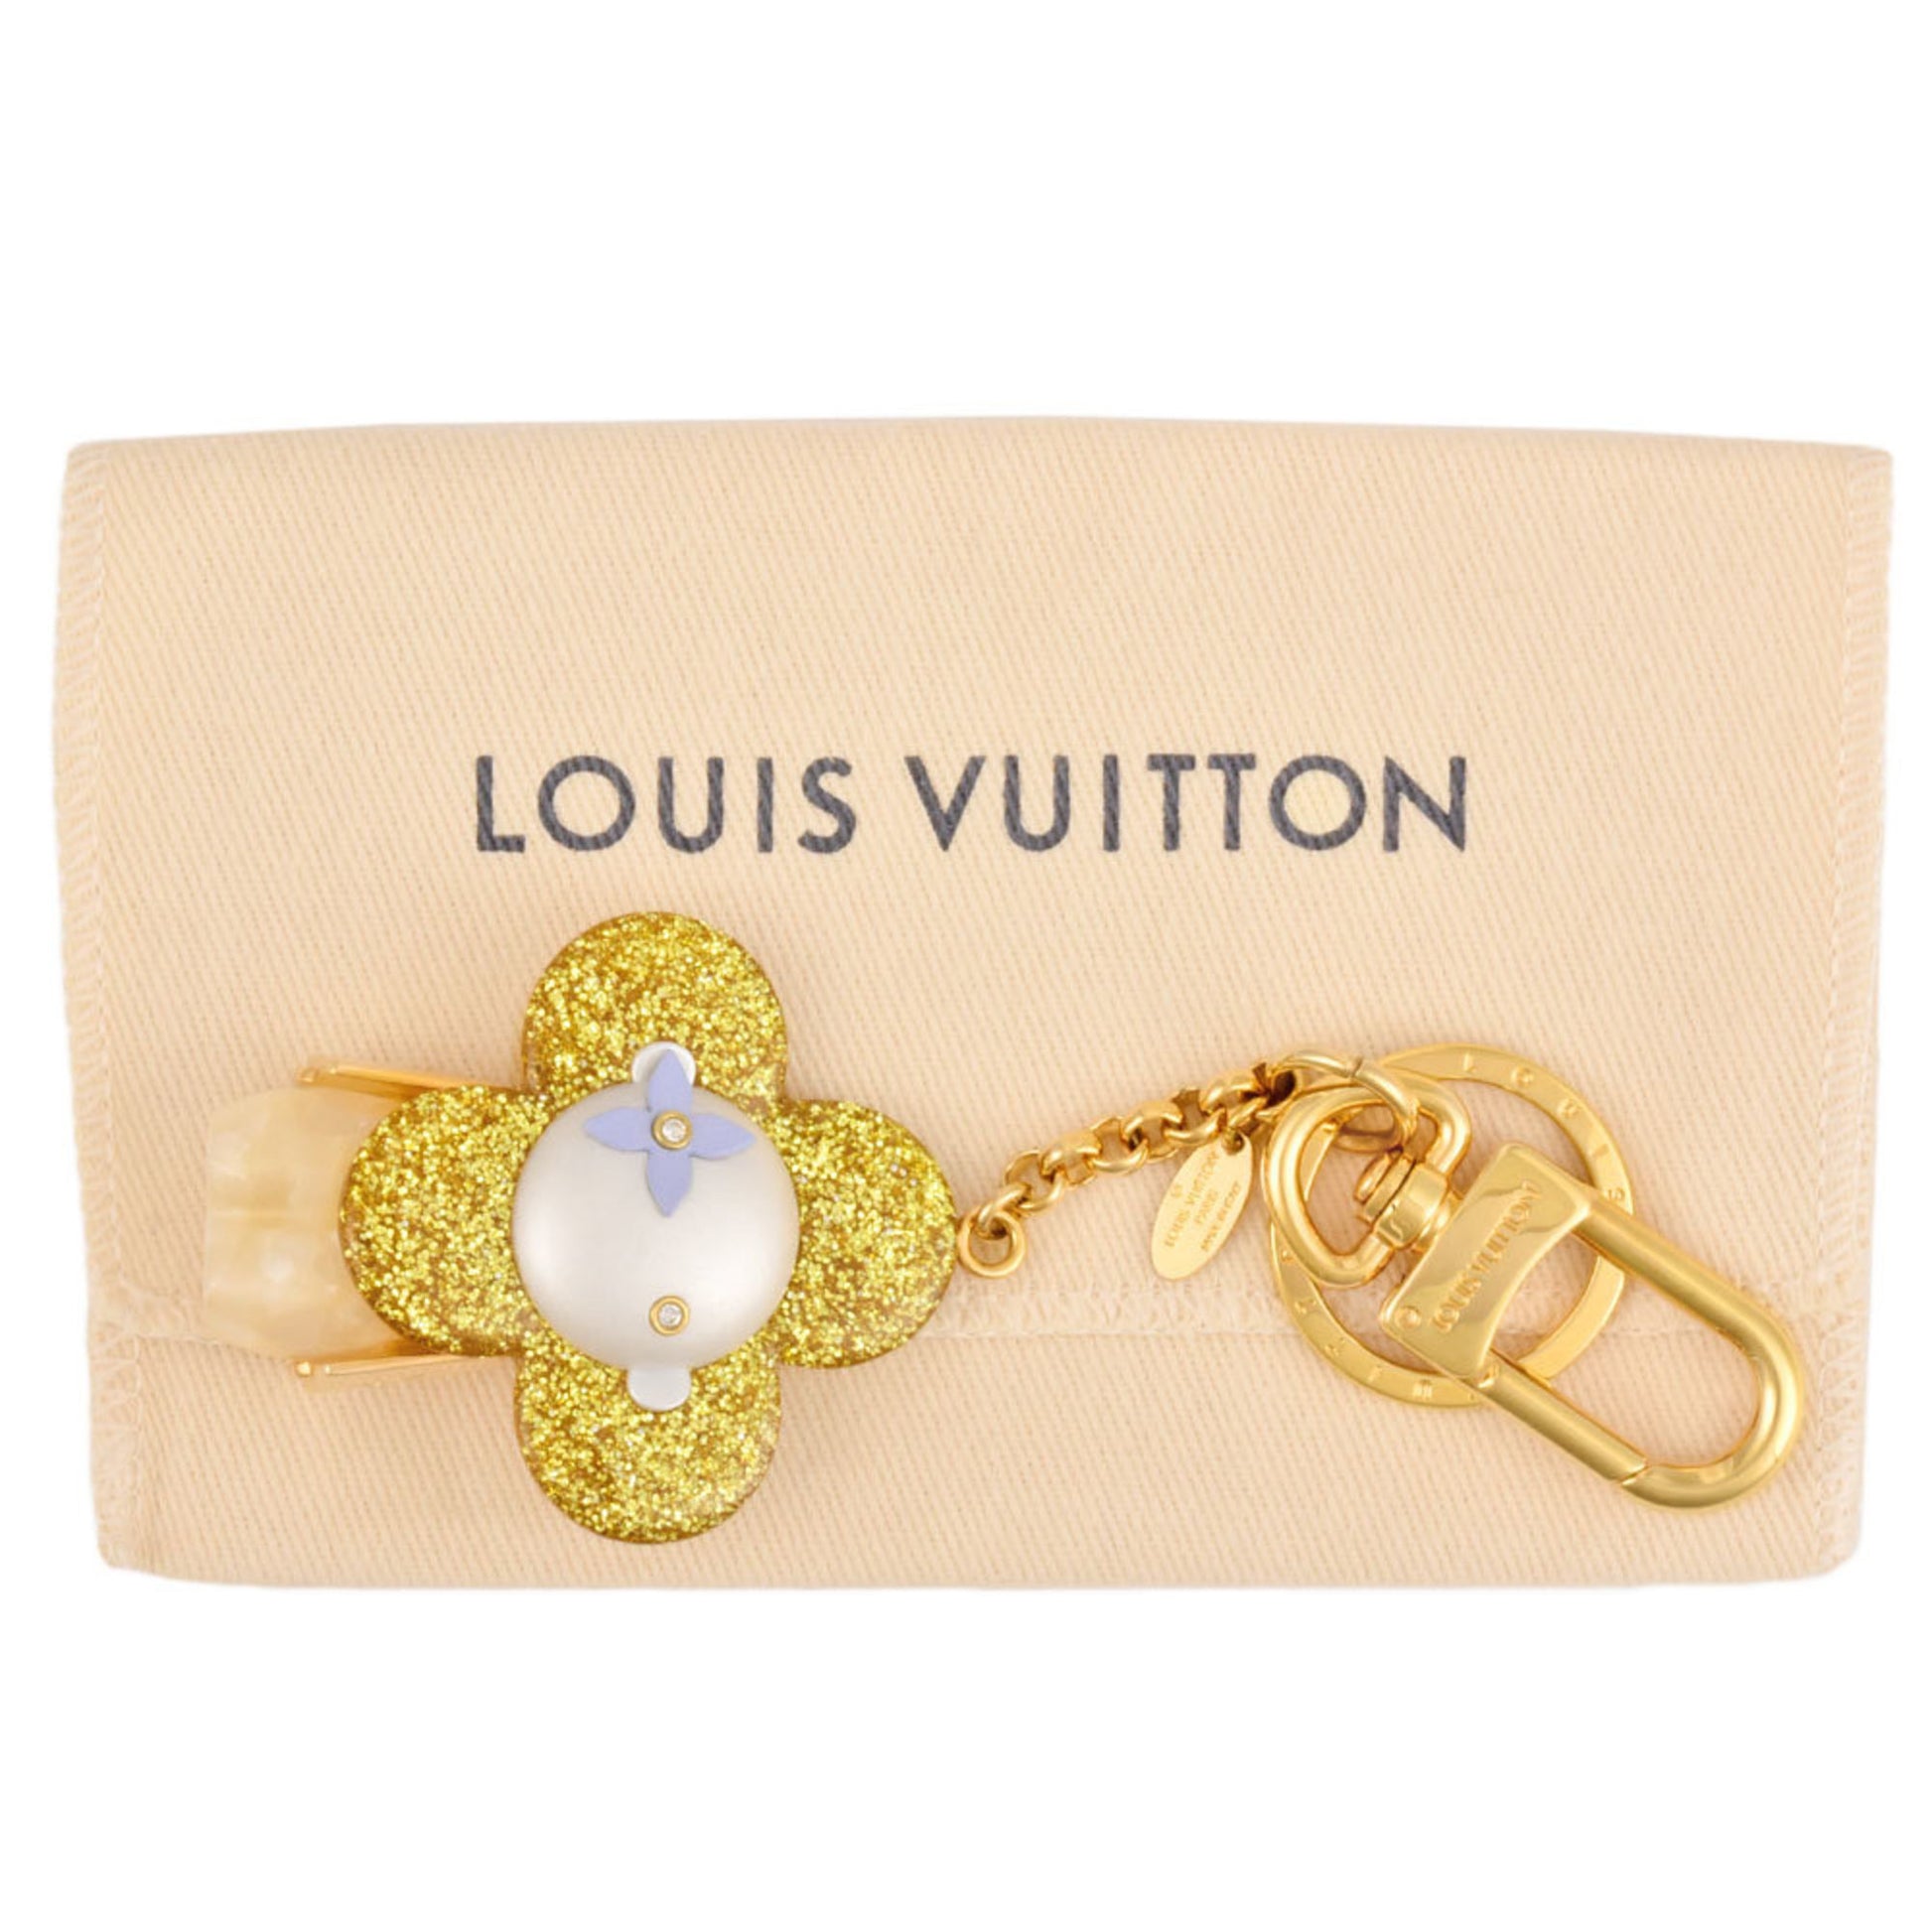 LOUIS VUITTON Strass Vivienne Winter Bag Charm Key Holder Gold